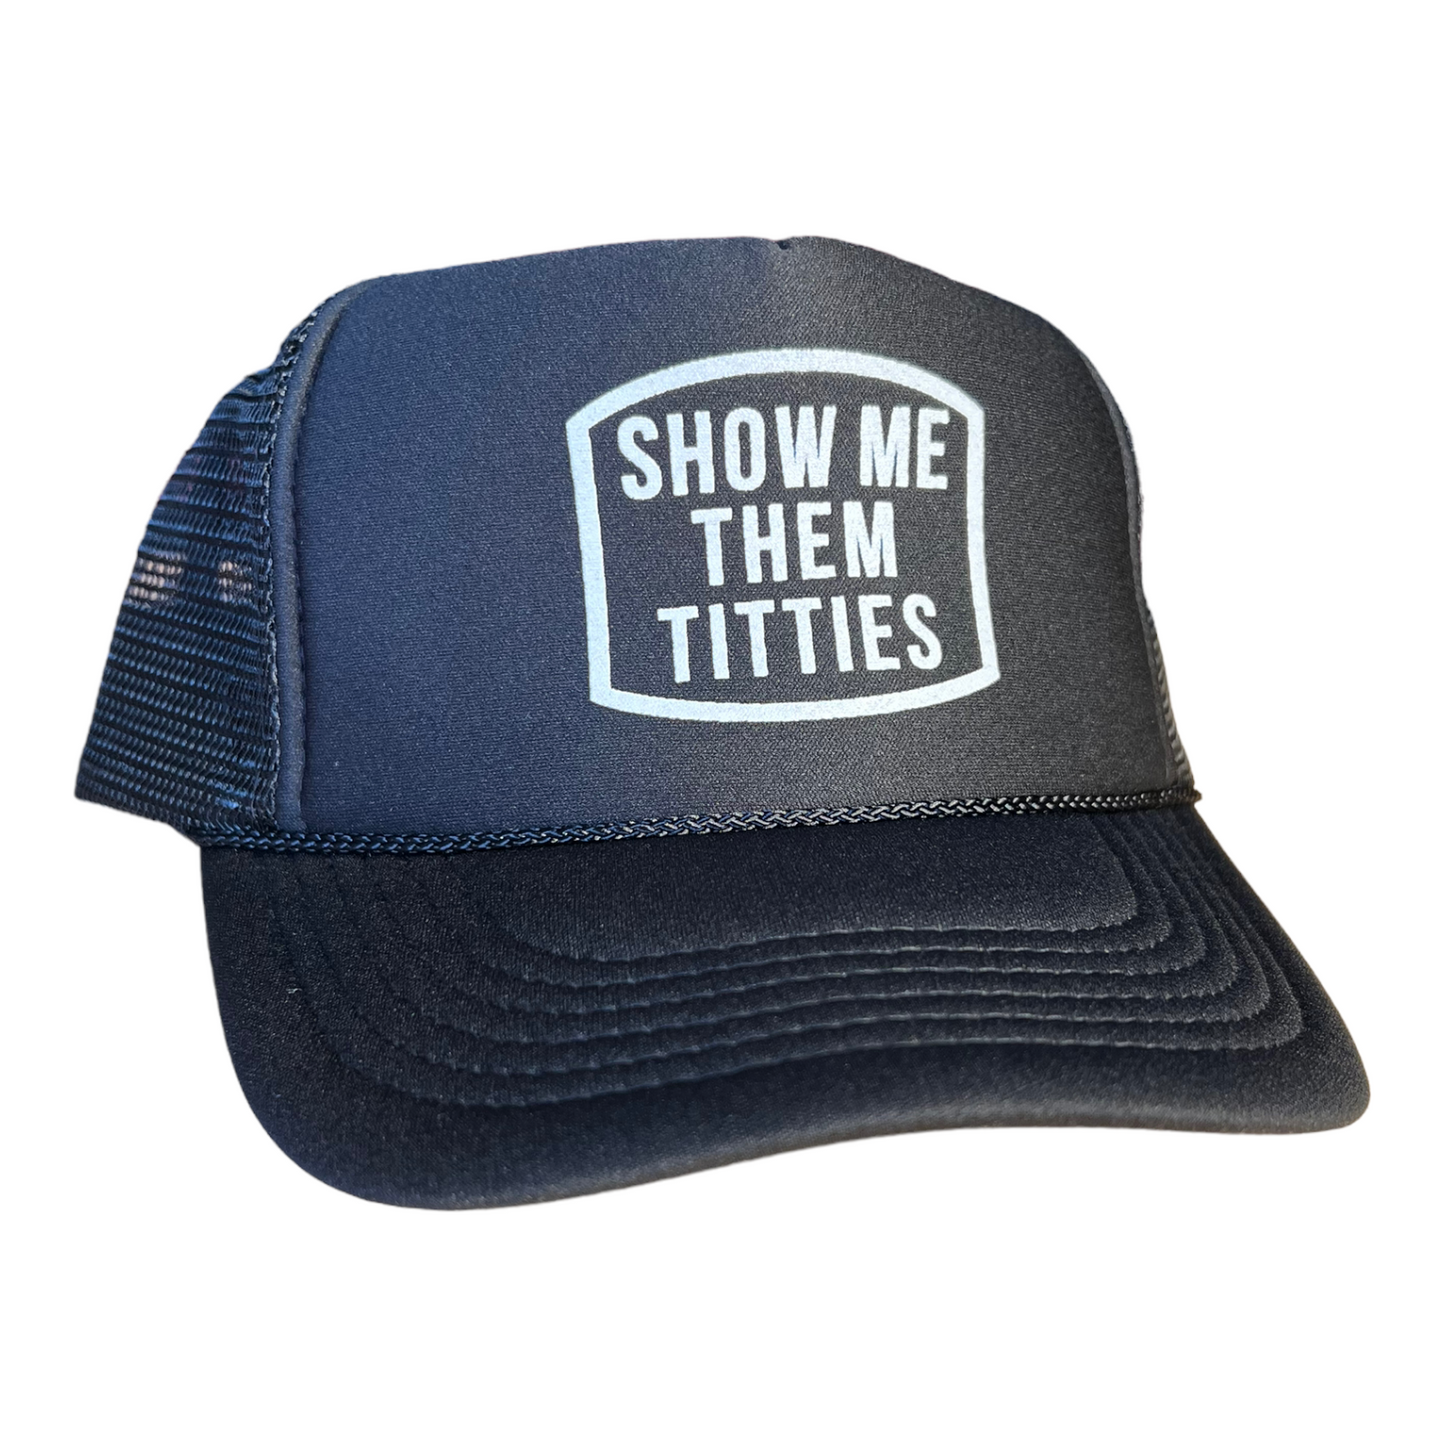 Show Me Them Titties Trucker Hat Funny Trucker Hat Black